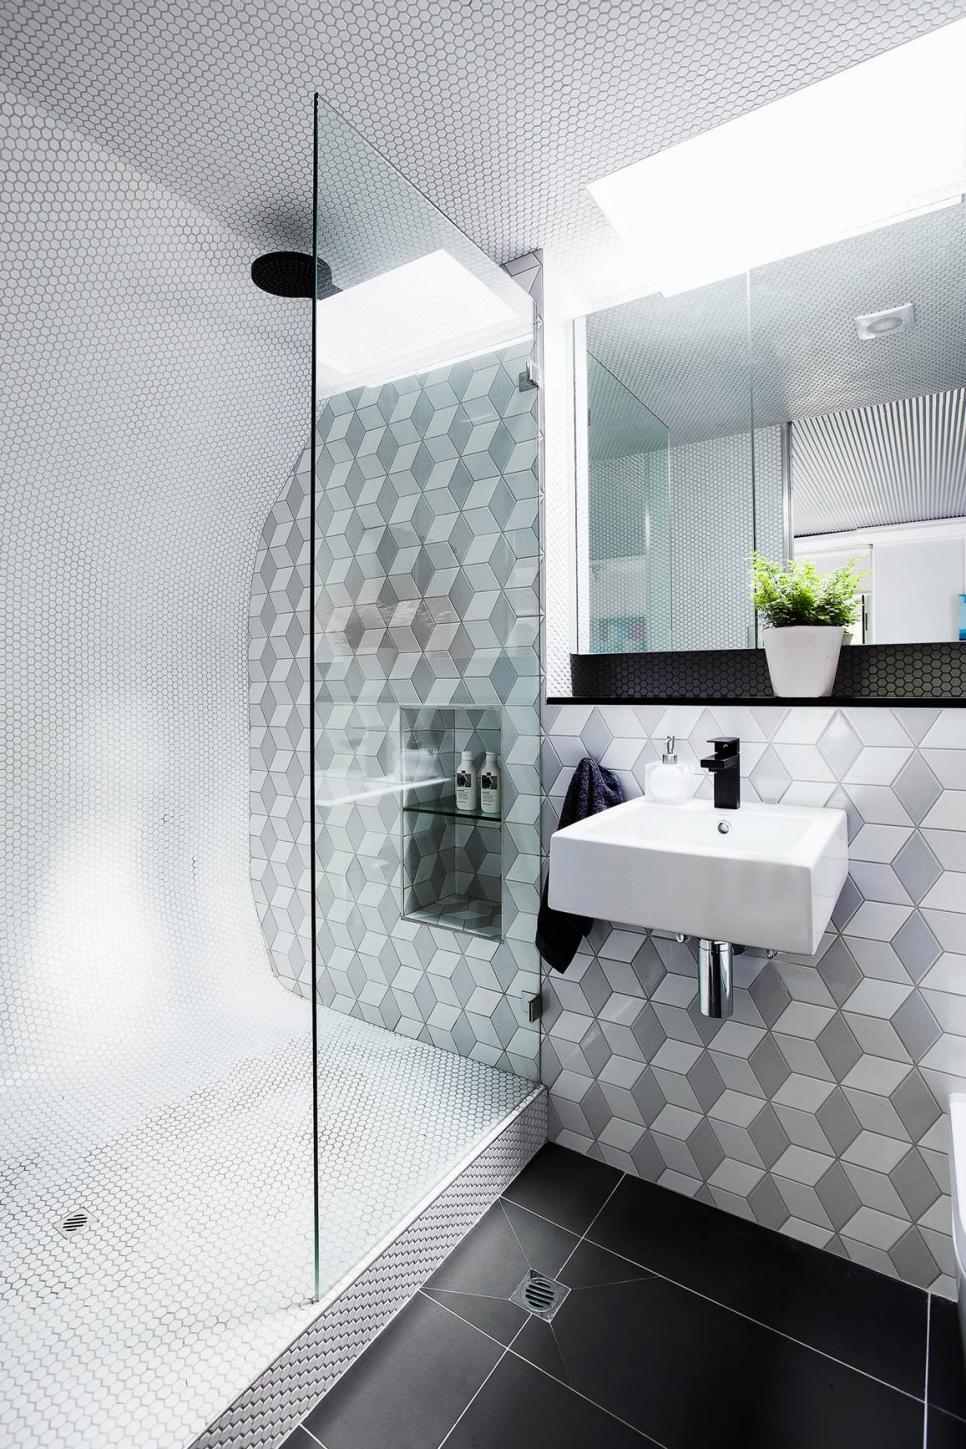 Modern, Geometric Tile Bathroom | HGTV